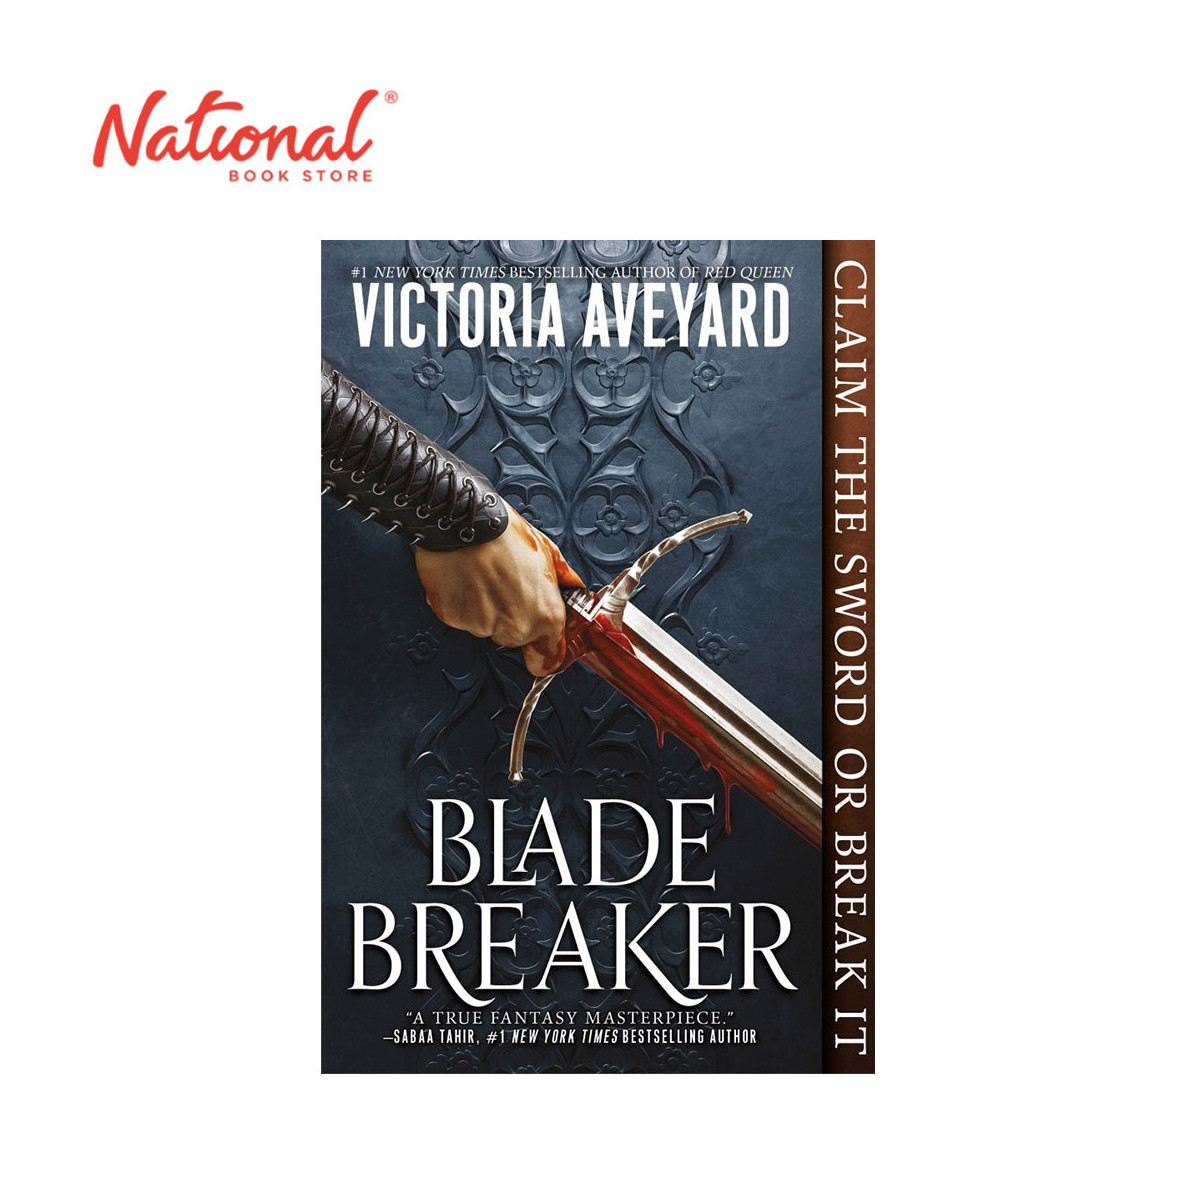 Blade Breaker by Victoria Aveyard - Trade Paperback - Teens Fiction